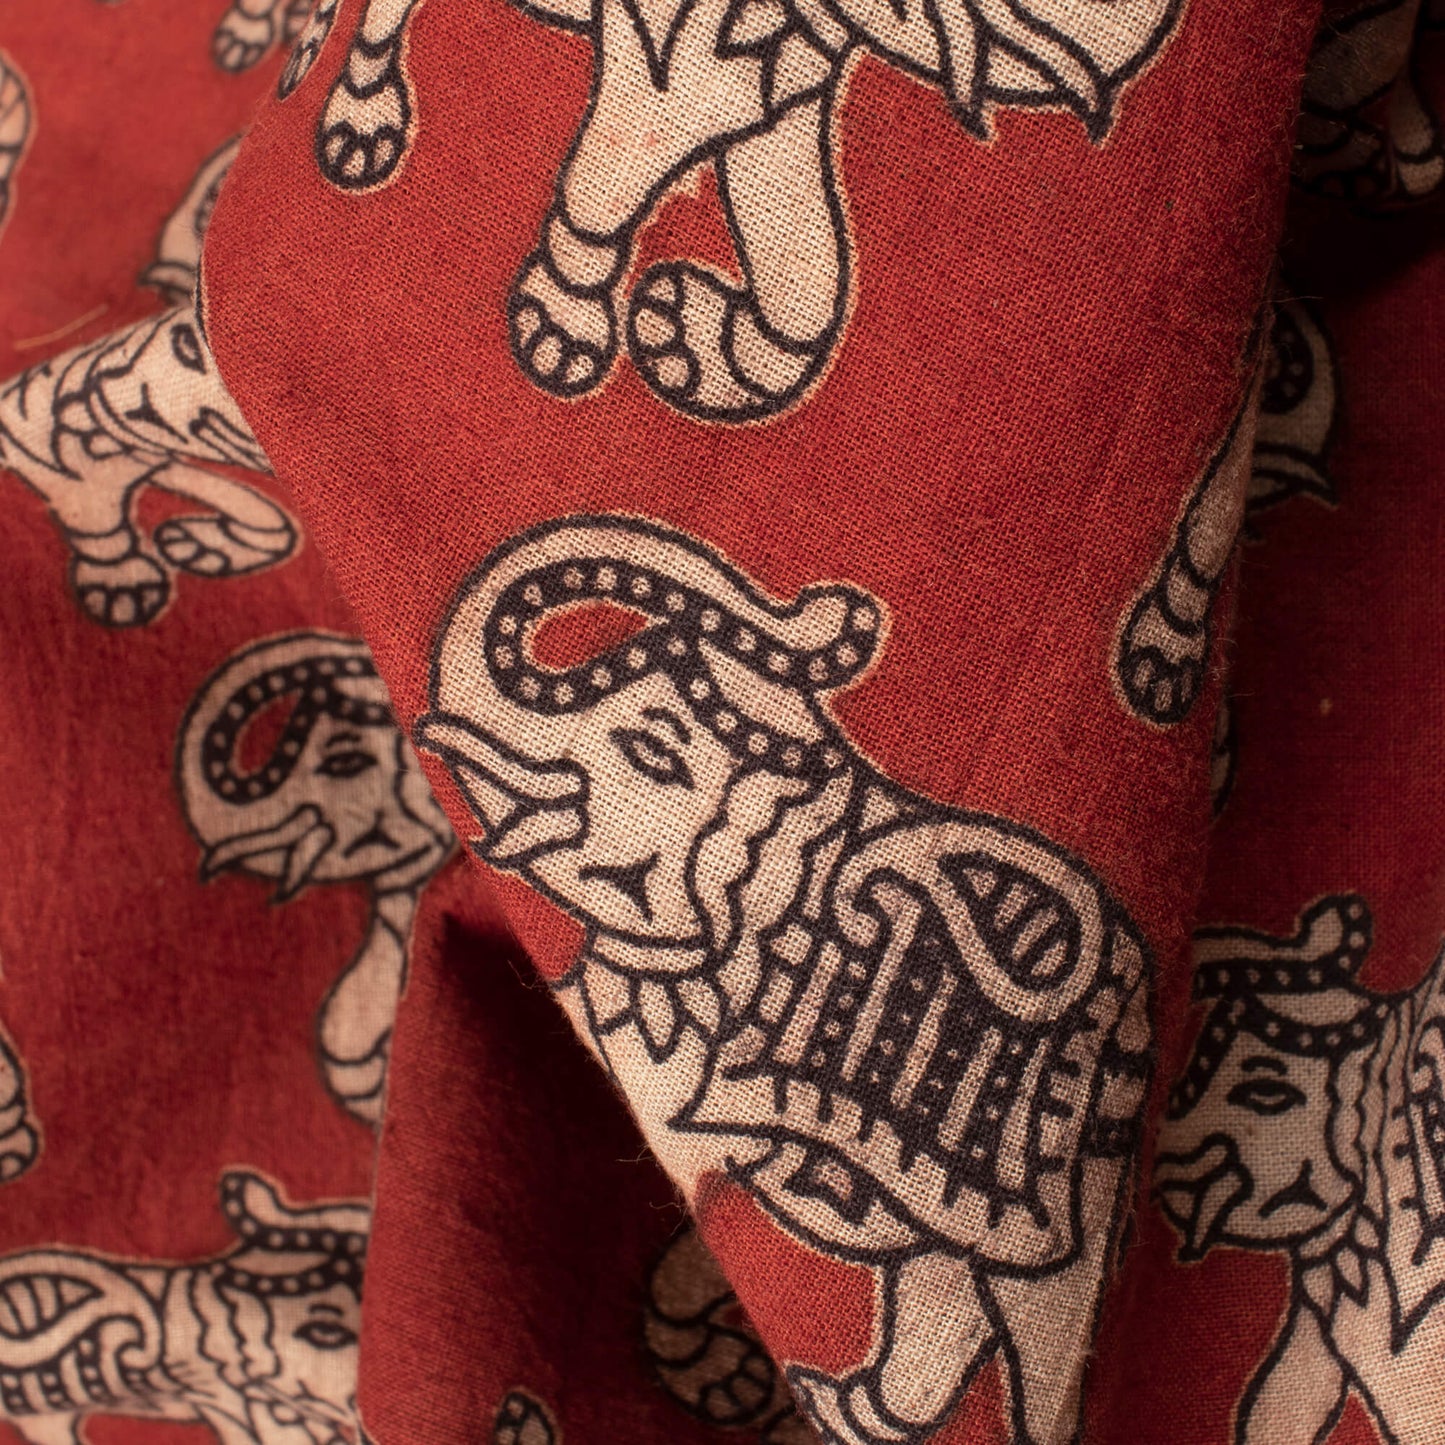 Merlot Red And Off White Animal Pattern Printed Kalamkari Cotton Fabric